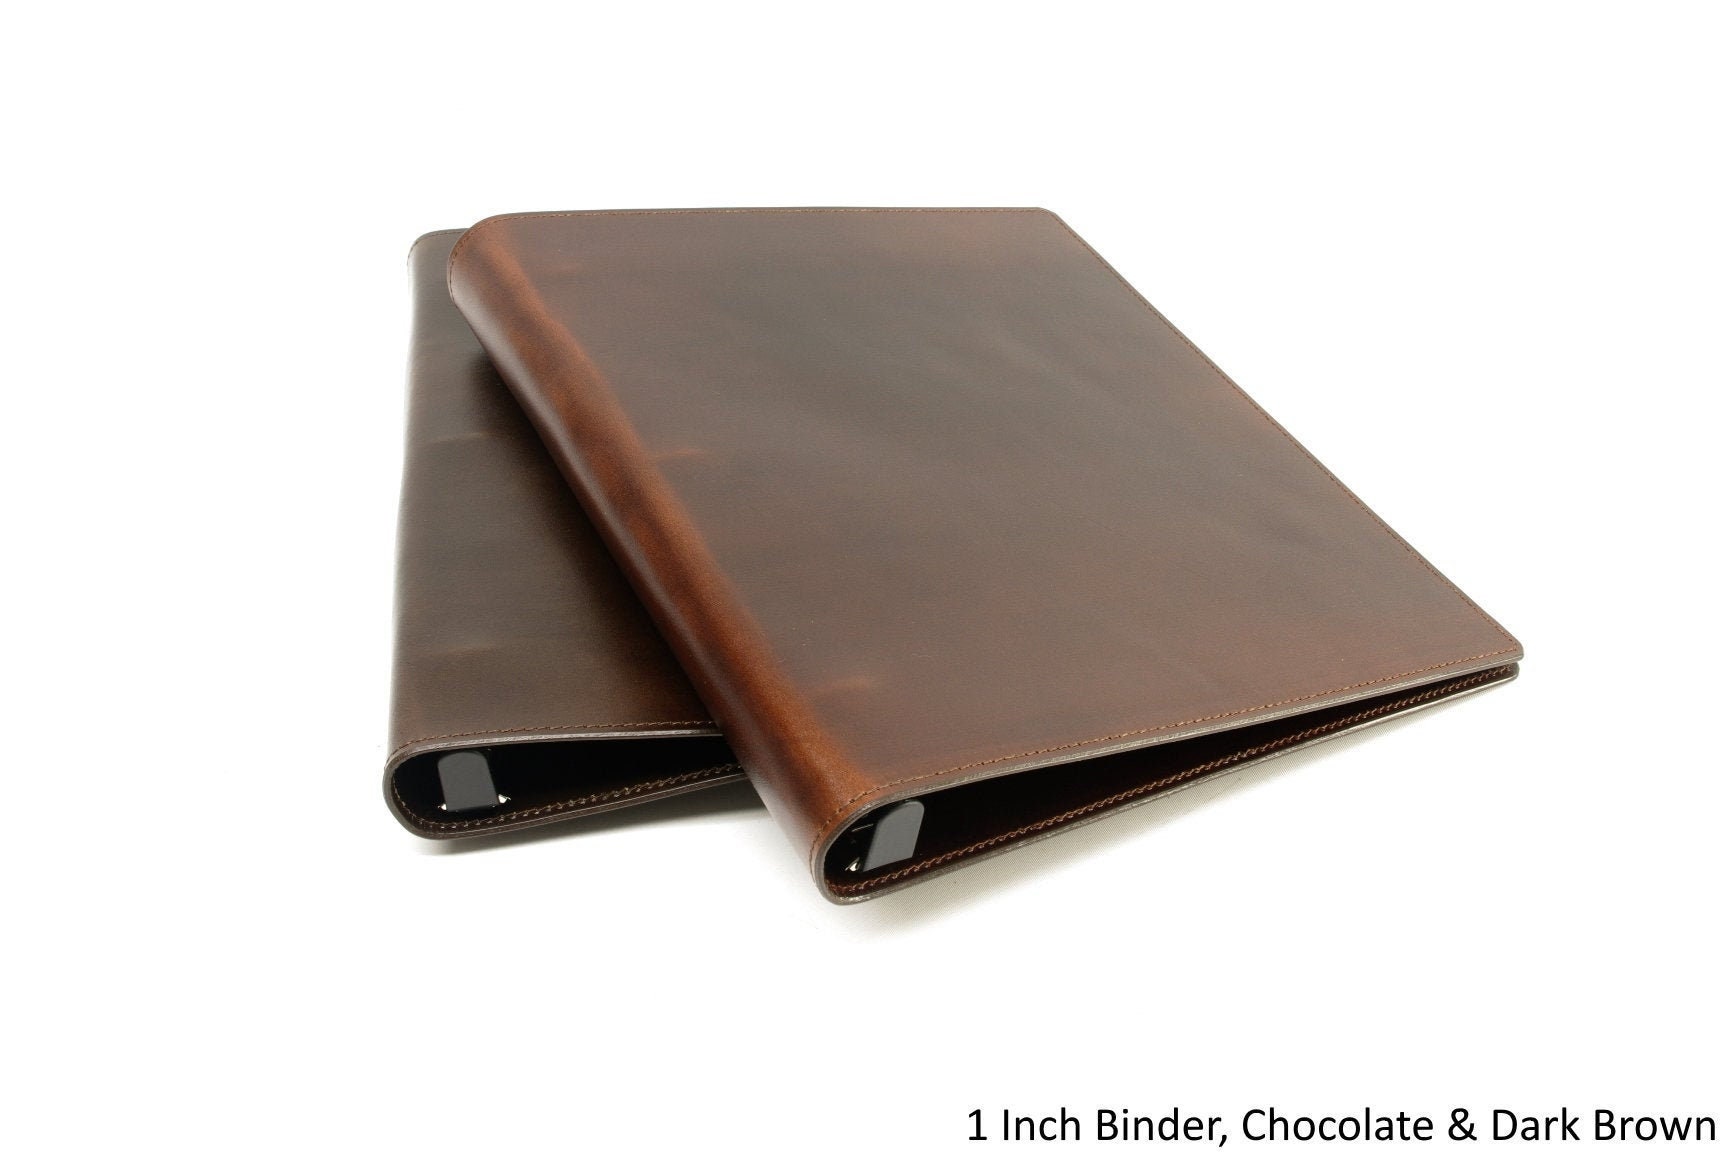 voorzien vee pen Leather 3 Ring Binder - STANDARD SIZE - 1/2 inch, 1 inch, 1 1/2 inch, 2 inch